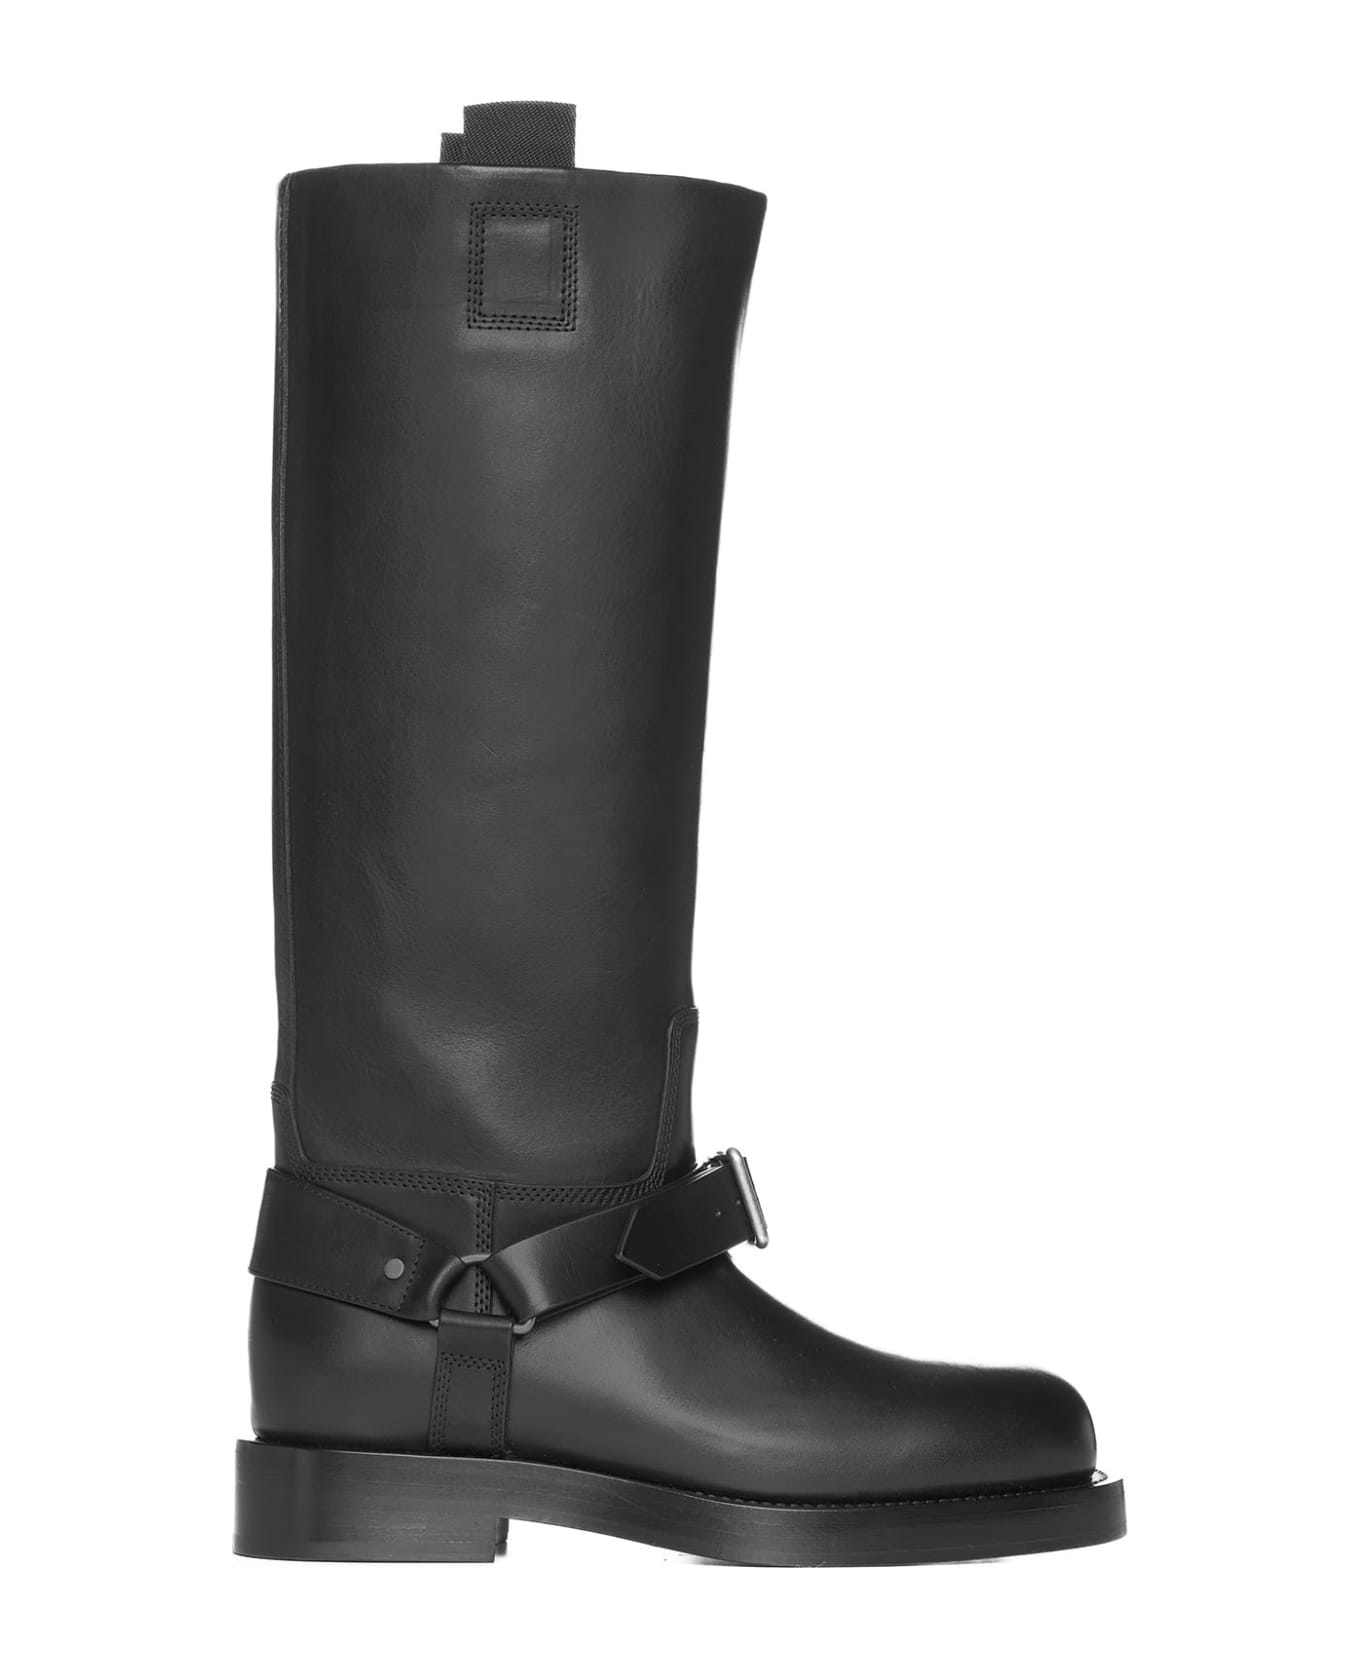 Burberry Saddle High Boots - Black